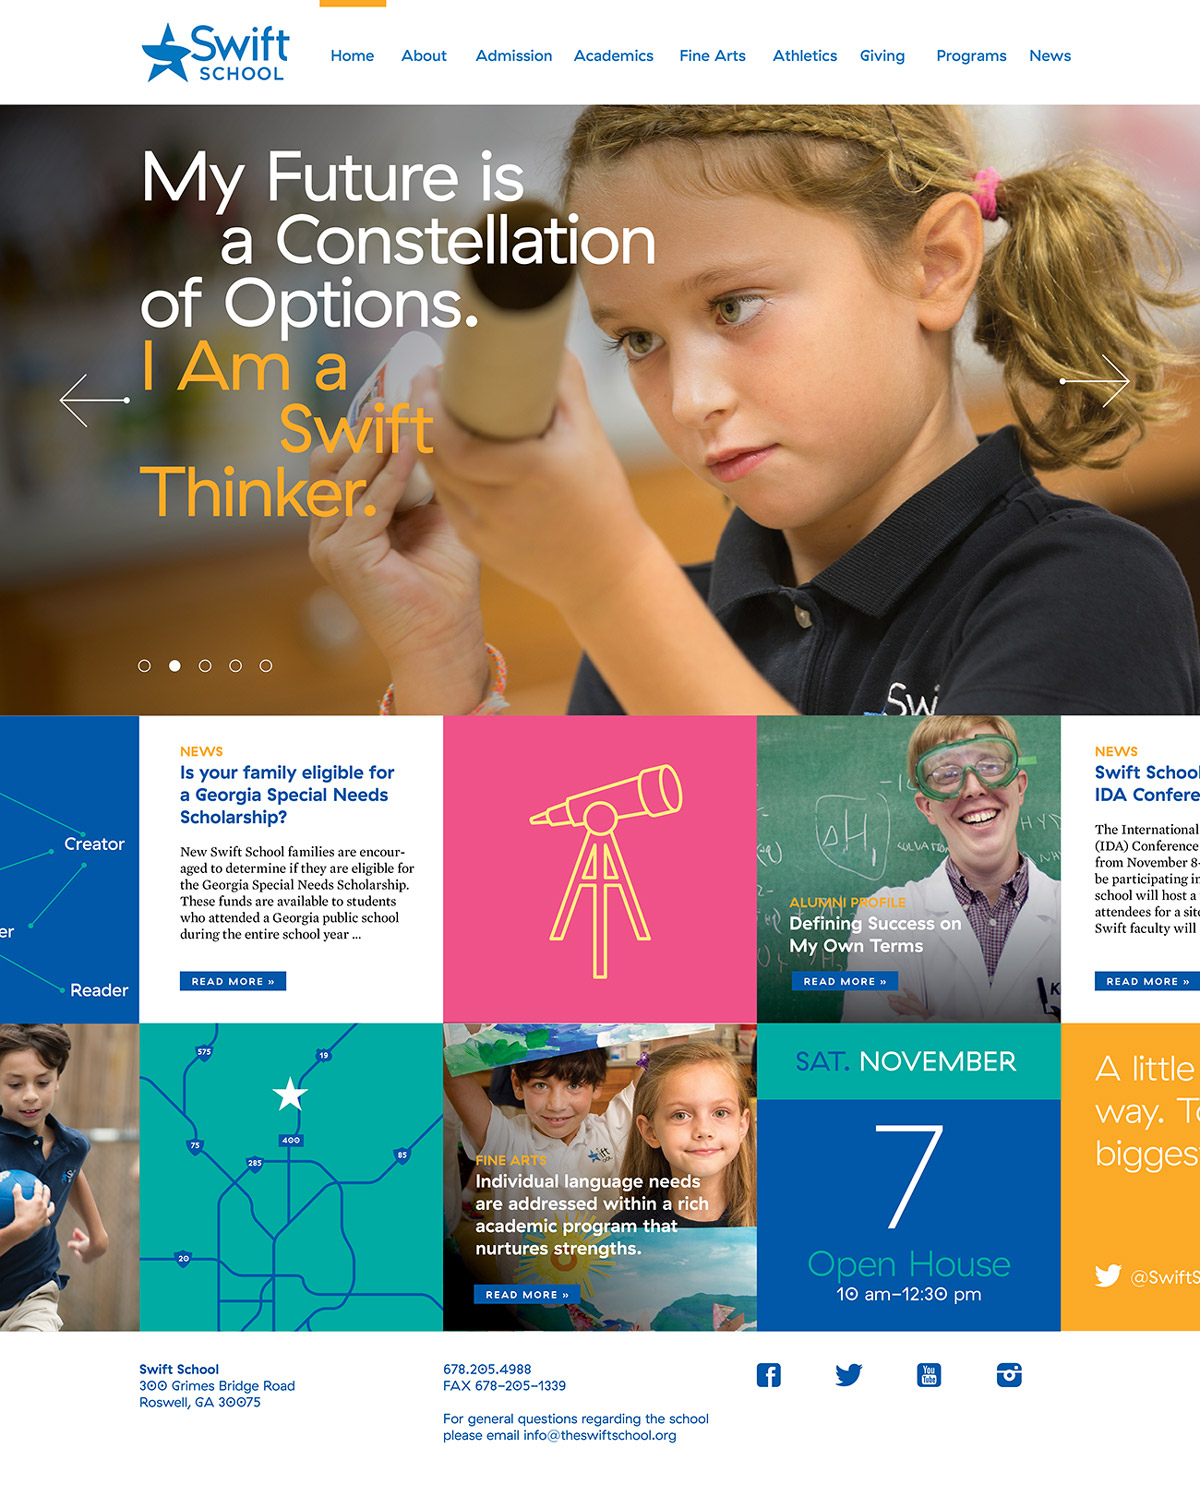 Swift School web concept, designed by Drew Sisk